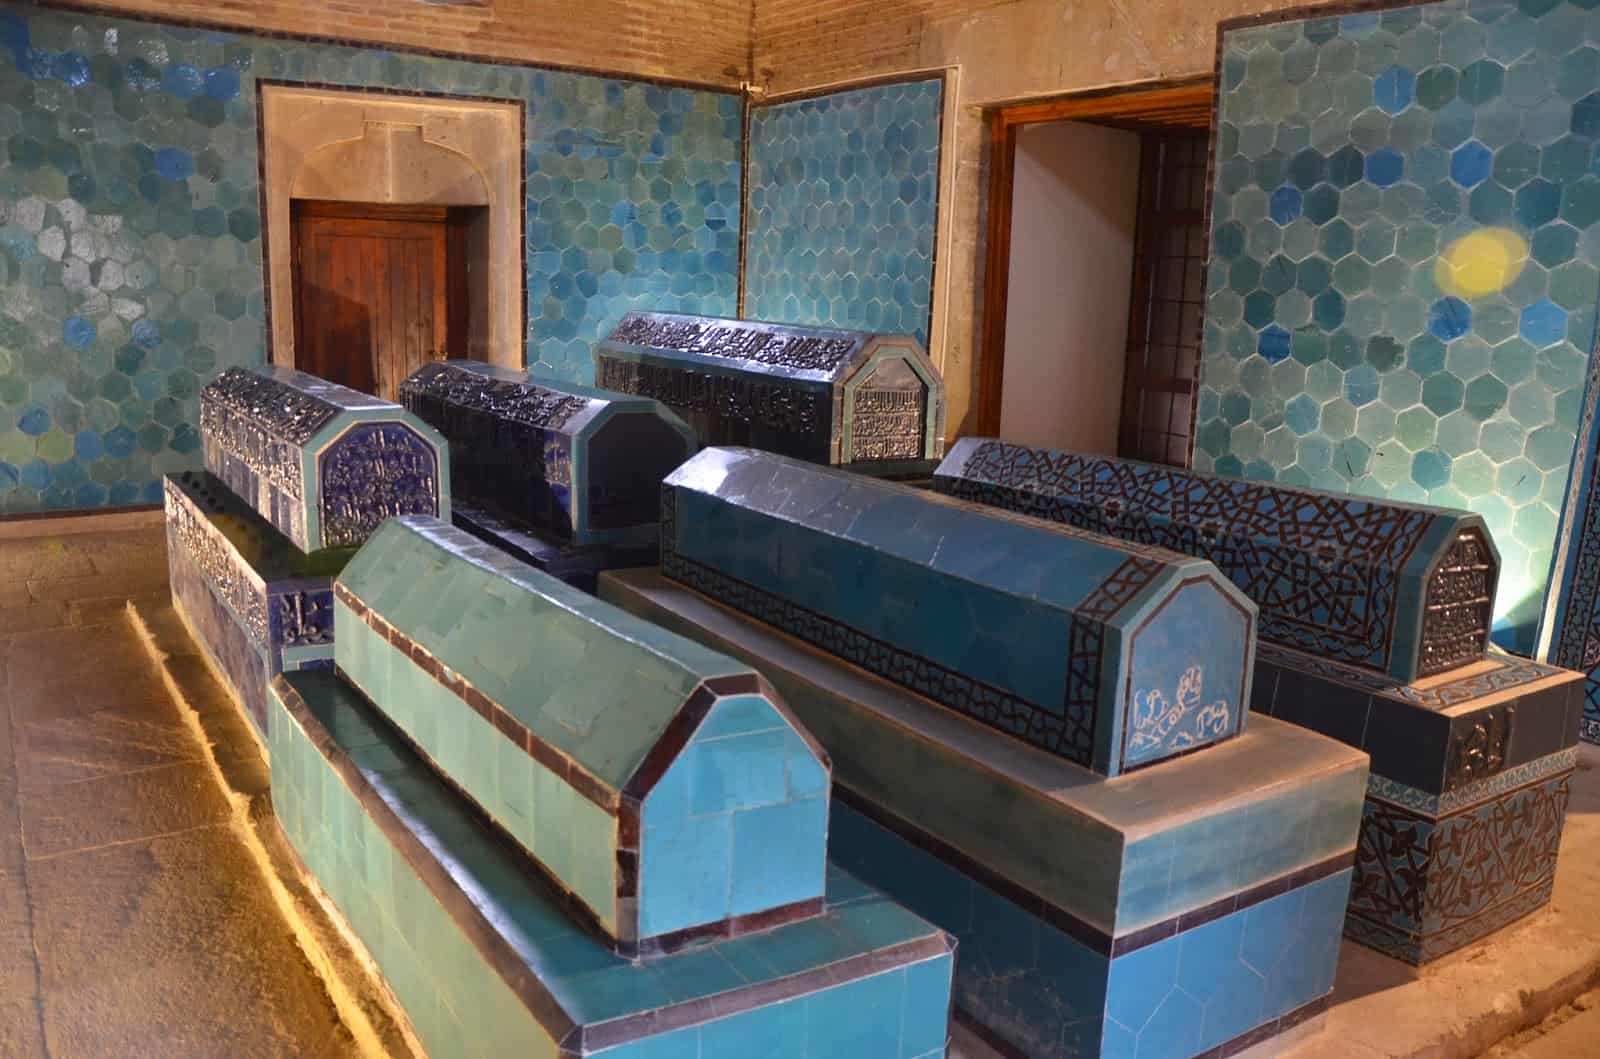 Tombs at the Sahib-i Ata Foundation Museum